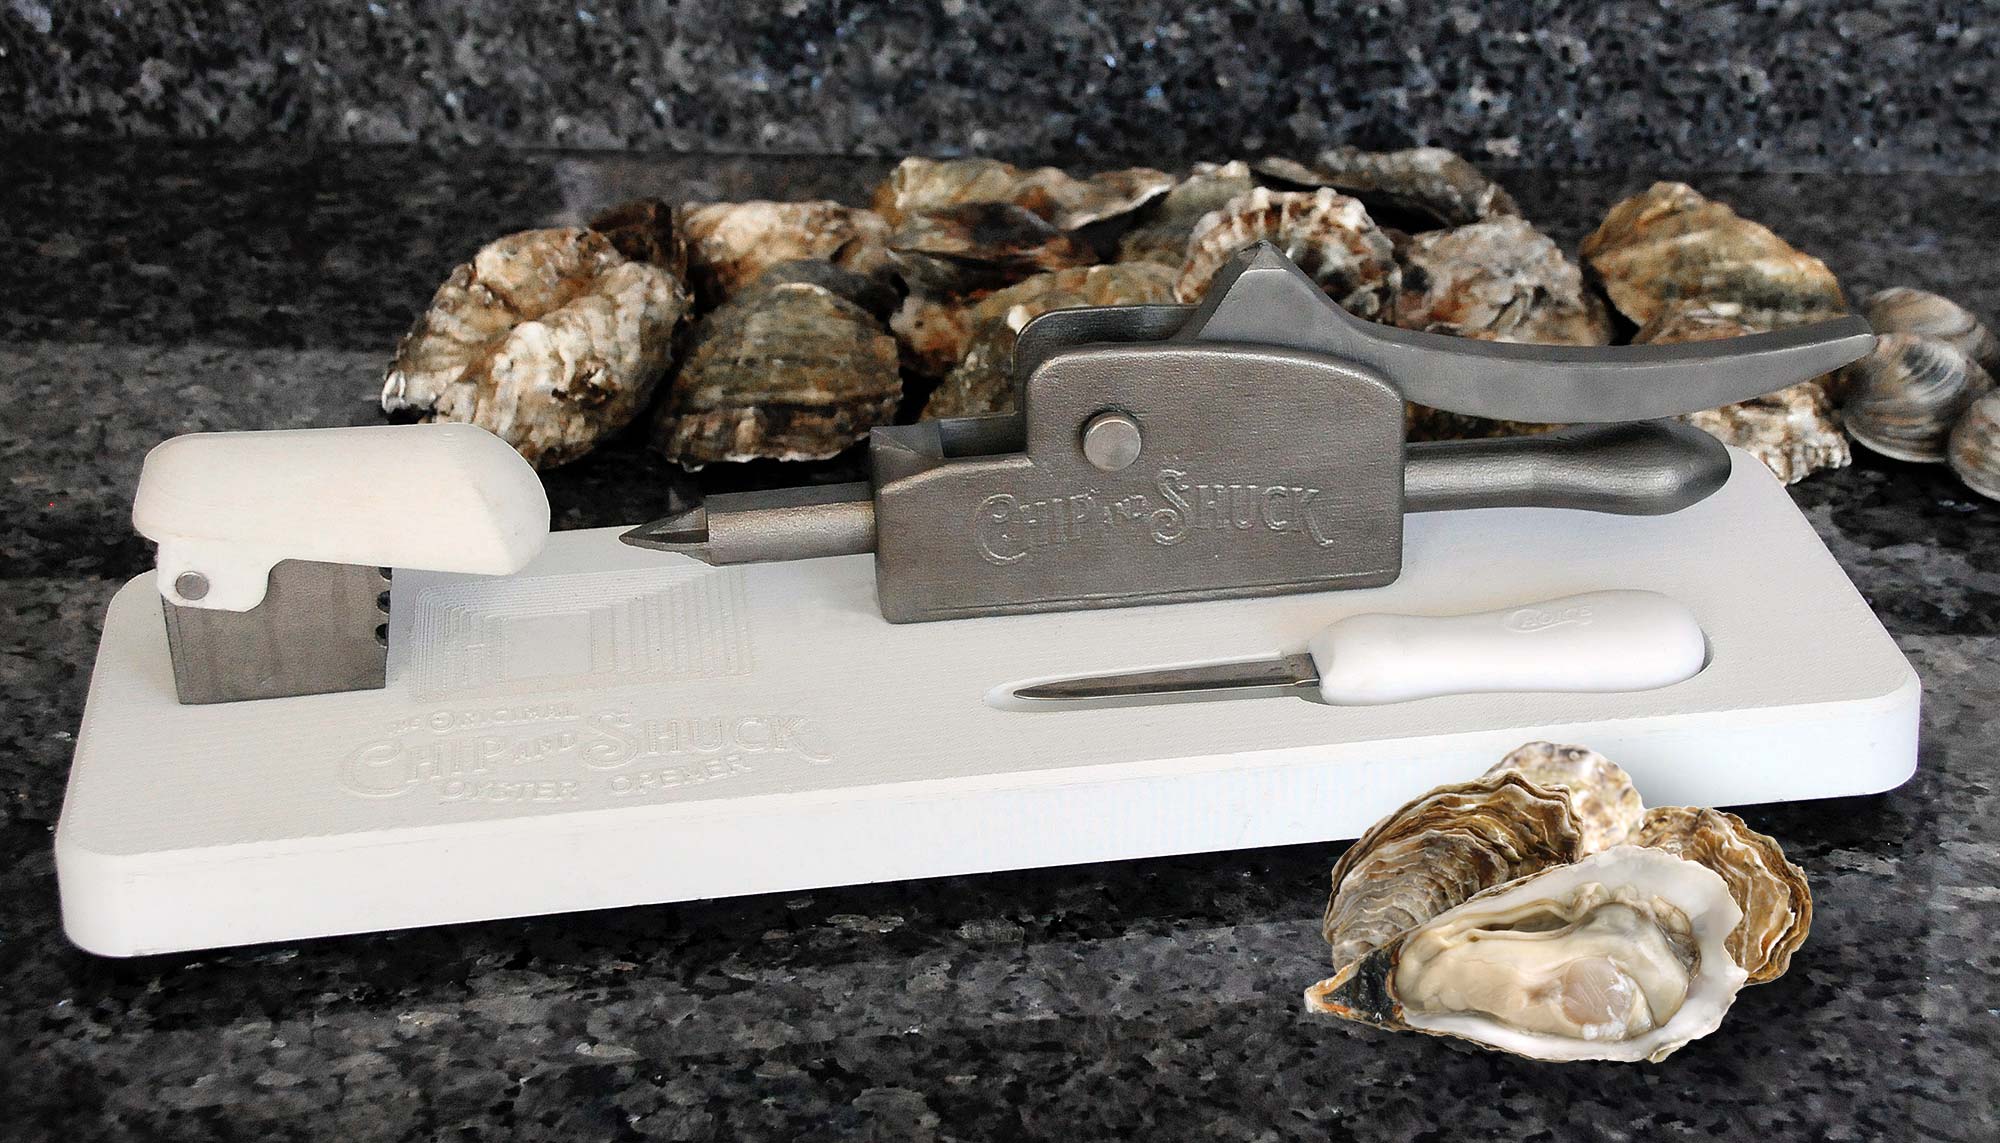 Garde OYSTSHUK Specialty Oyster Opener / Shucker